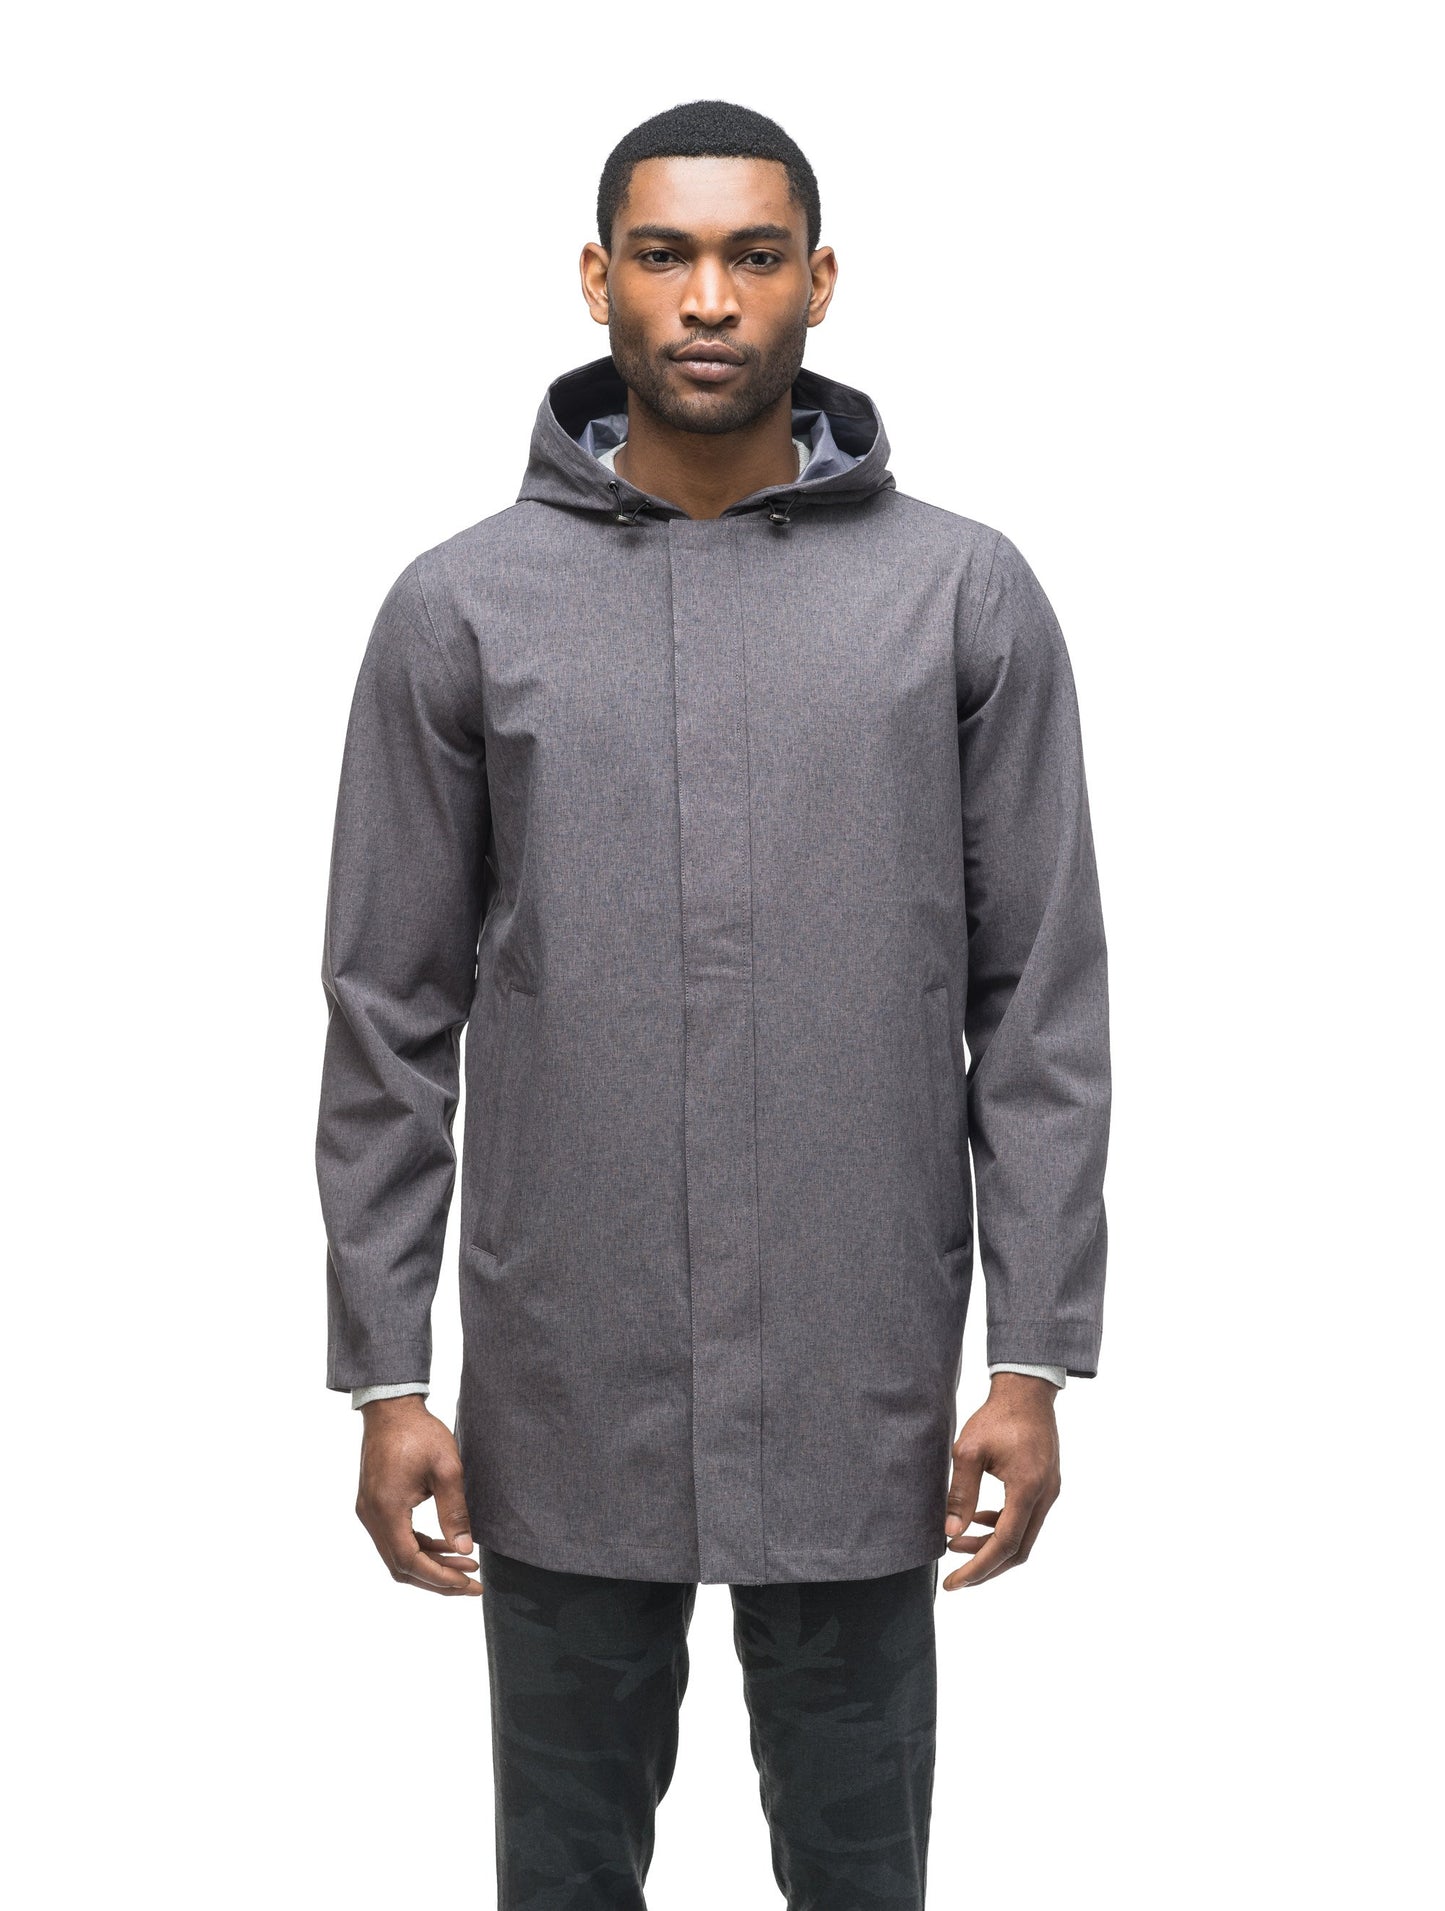 Men's thigh length rain coat with hood in Dk Grey